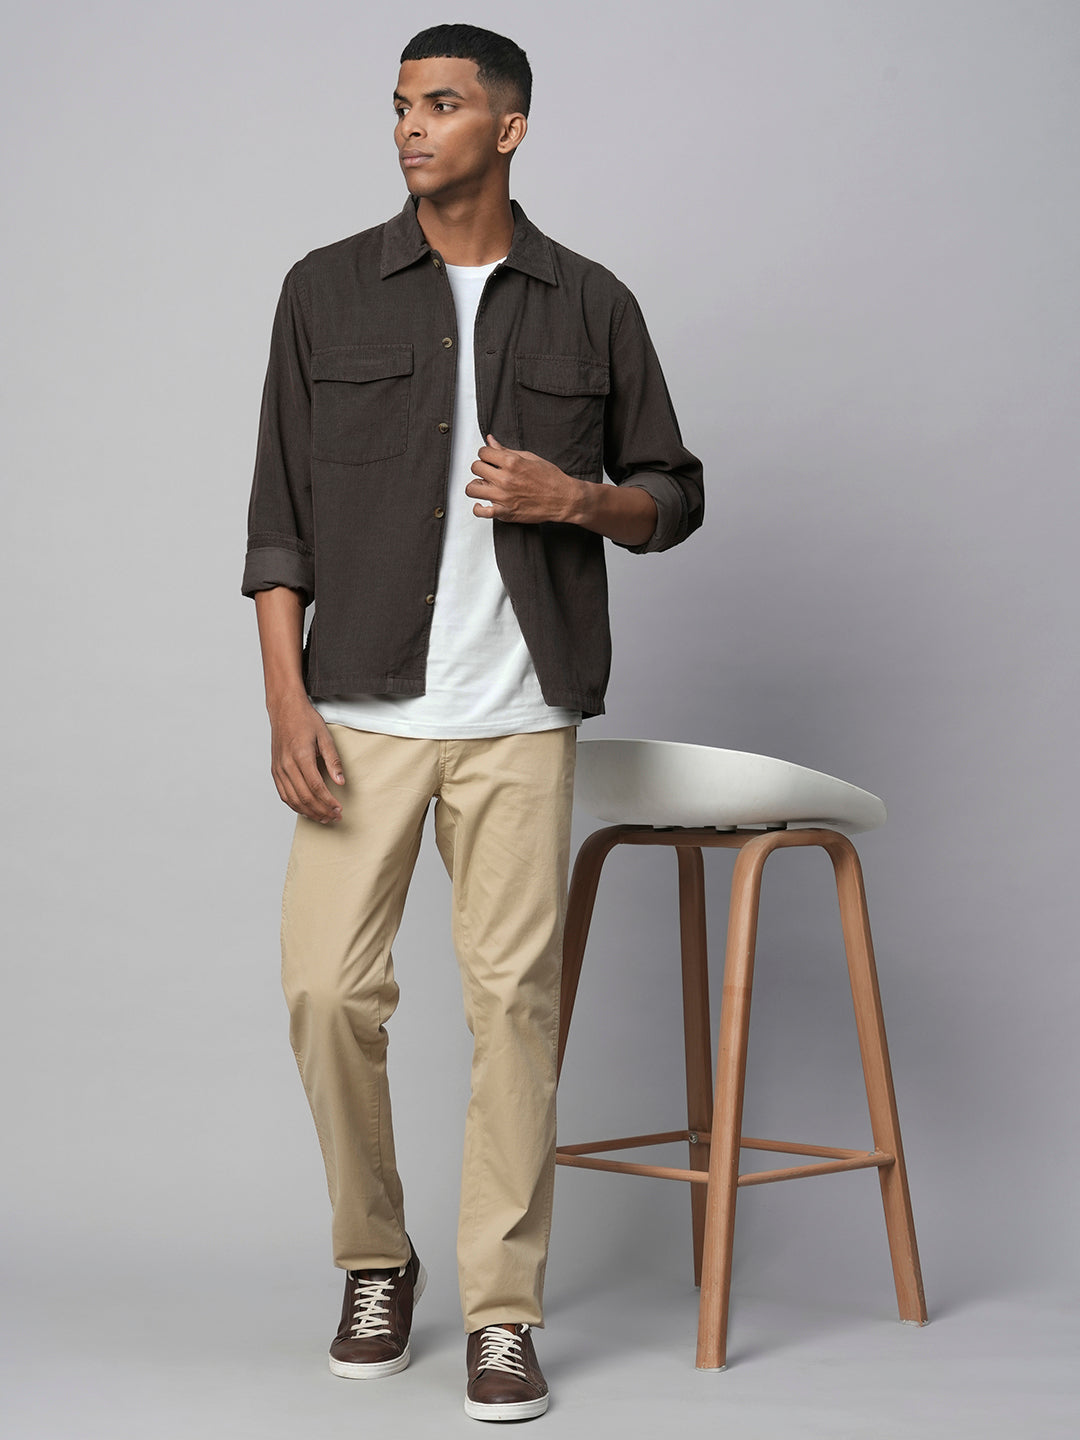 Men's Cotton Brown Regular Fit Jacket